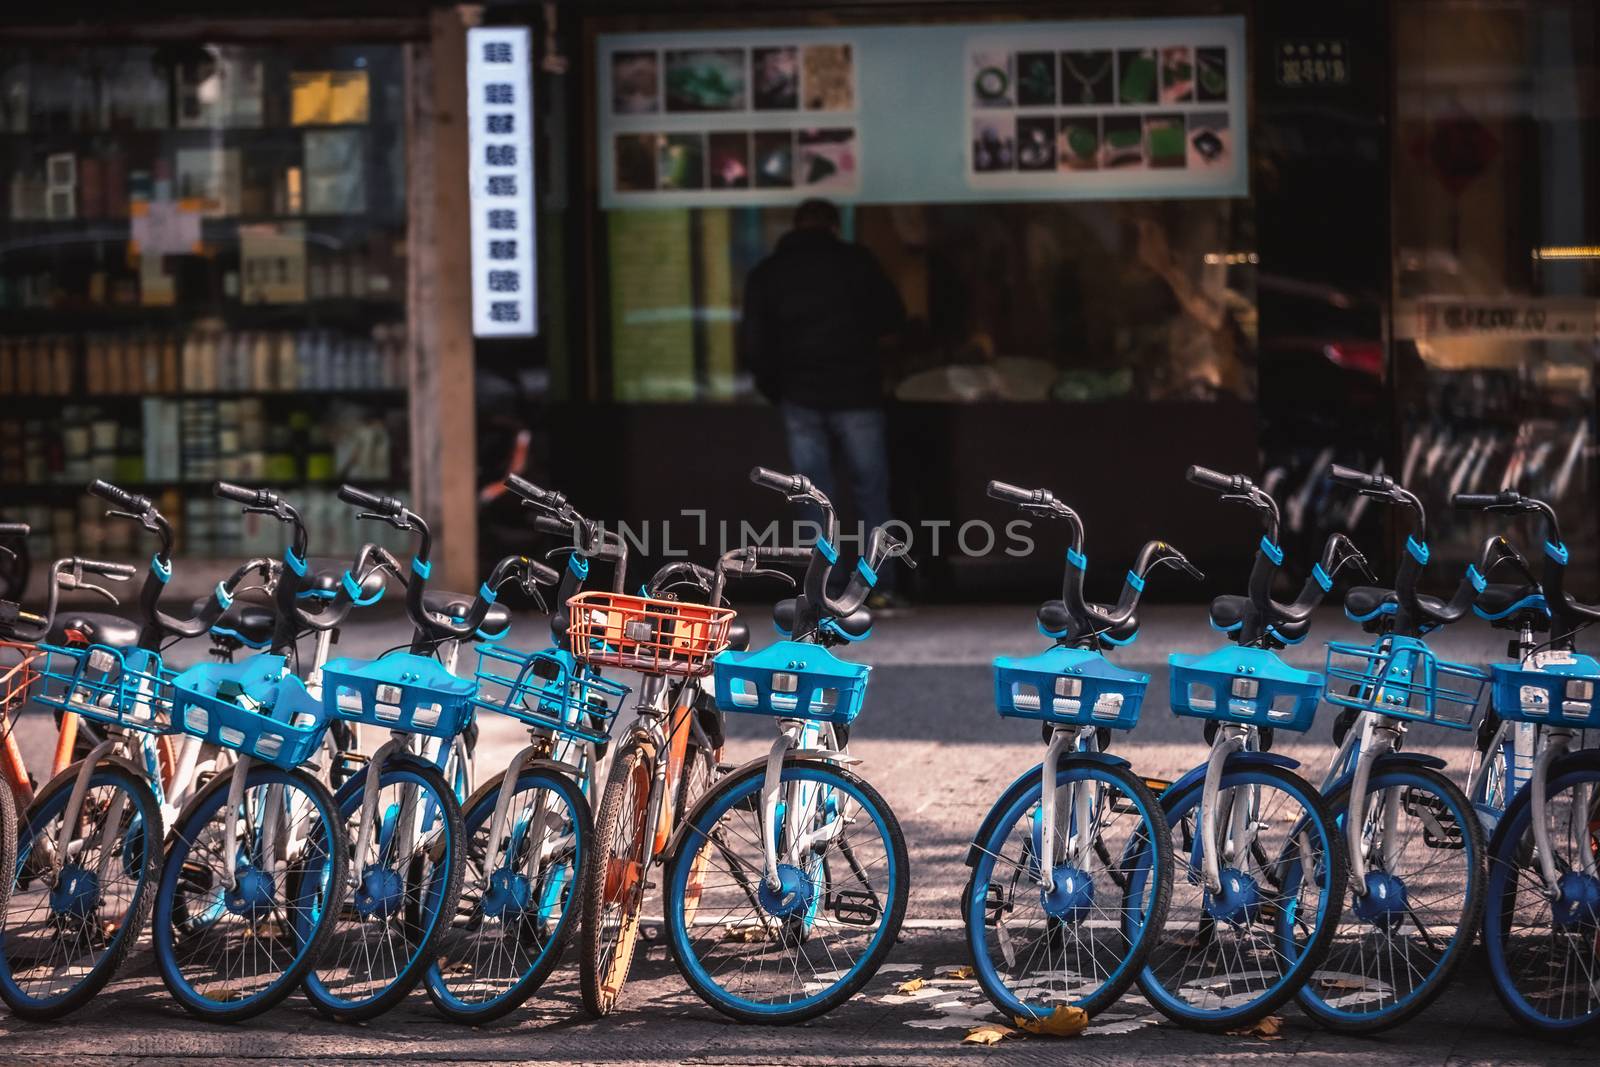 Rental electric bikes parked on the sidewalk, Hangzhou, China